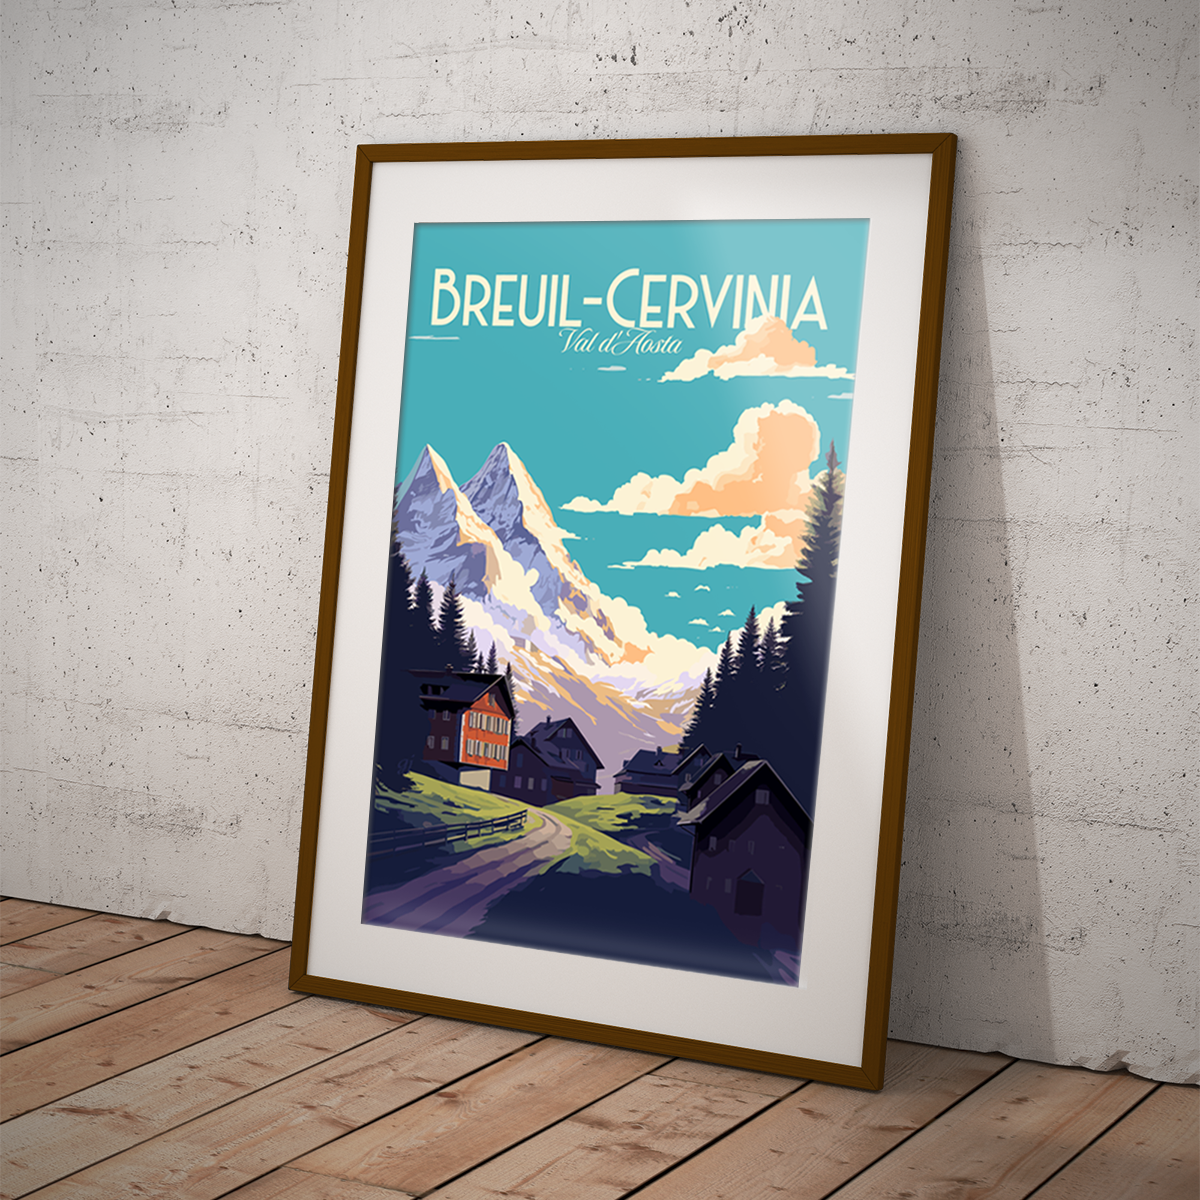 Breuil-Cervinia poster by bon voyage design